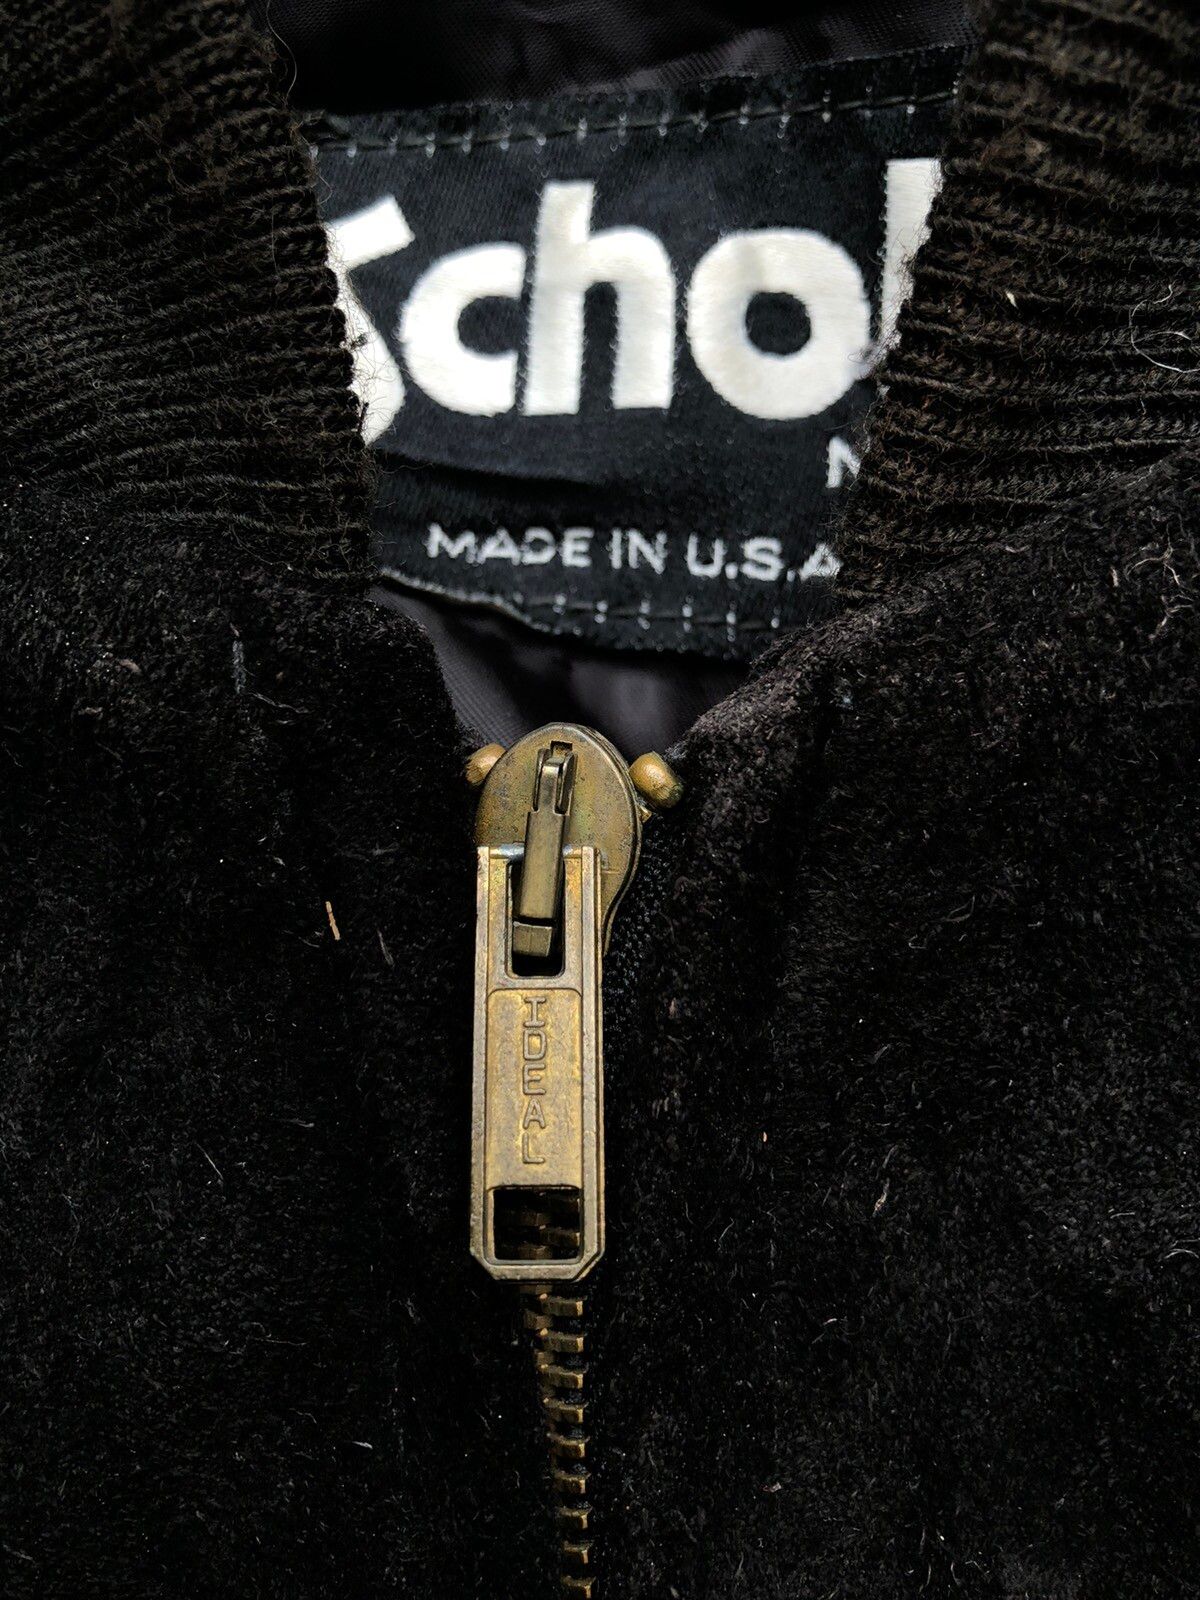 Vintage Schott Black Suede Leather Jacket - 8